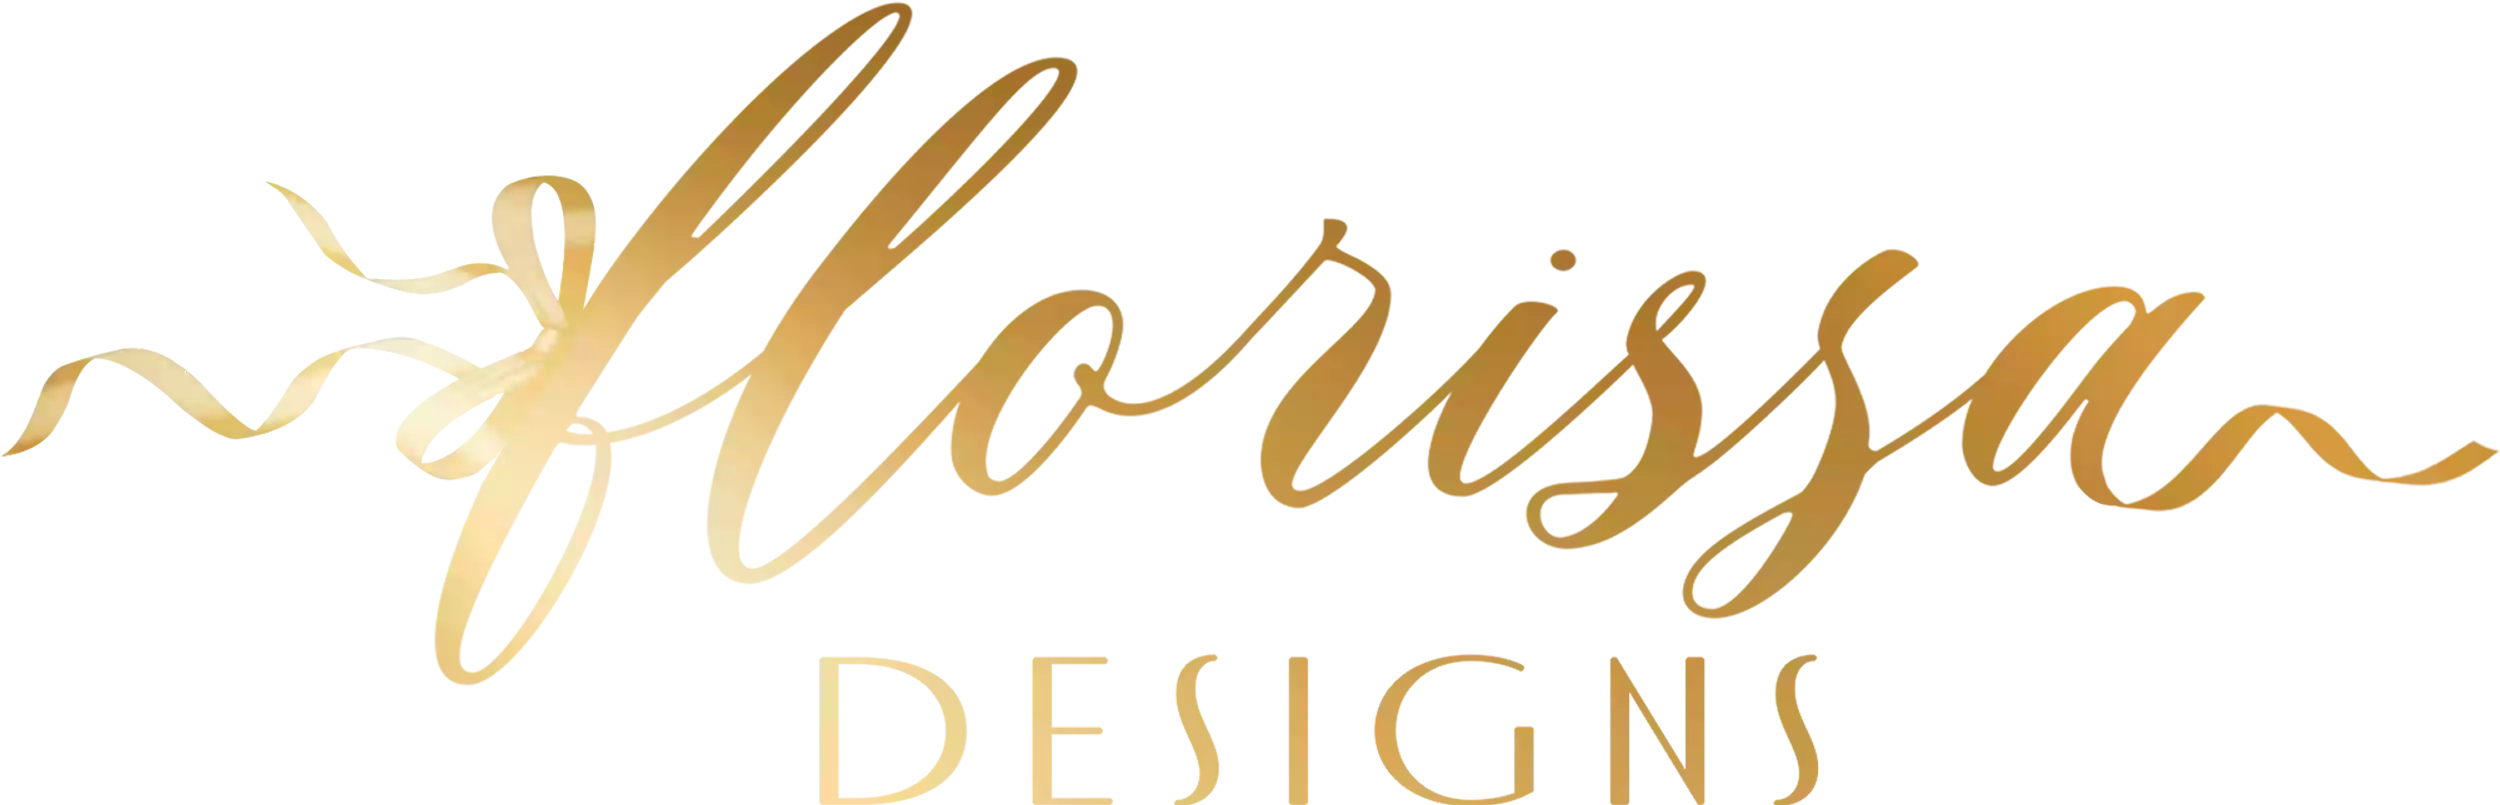 Florissa Designs